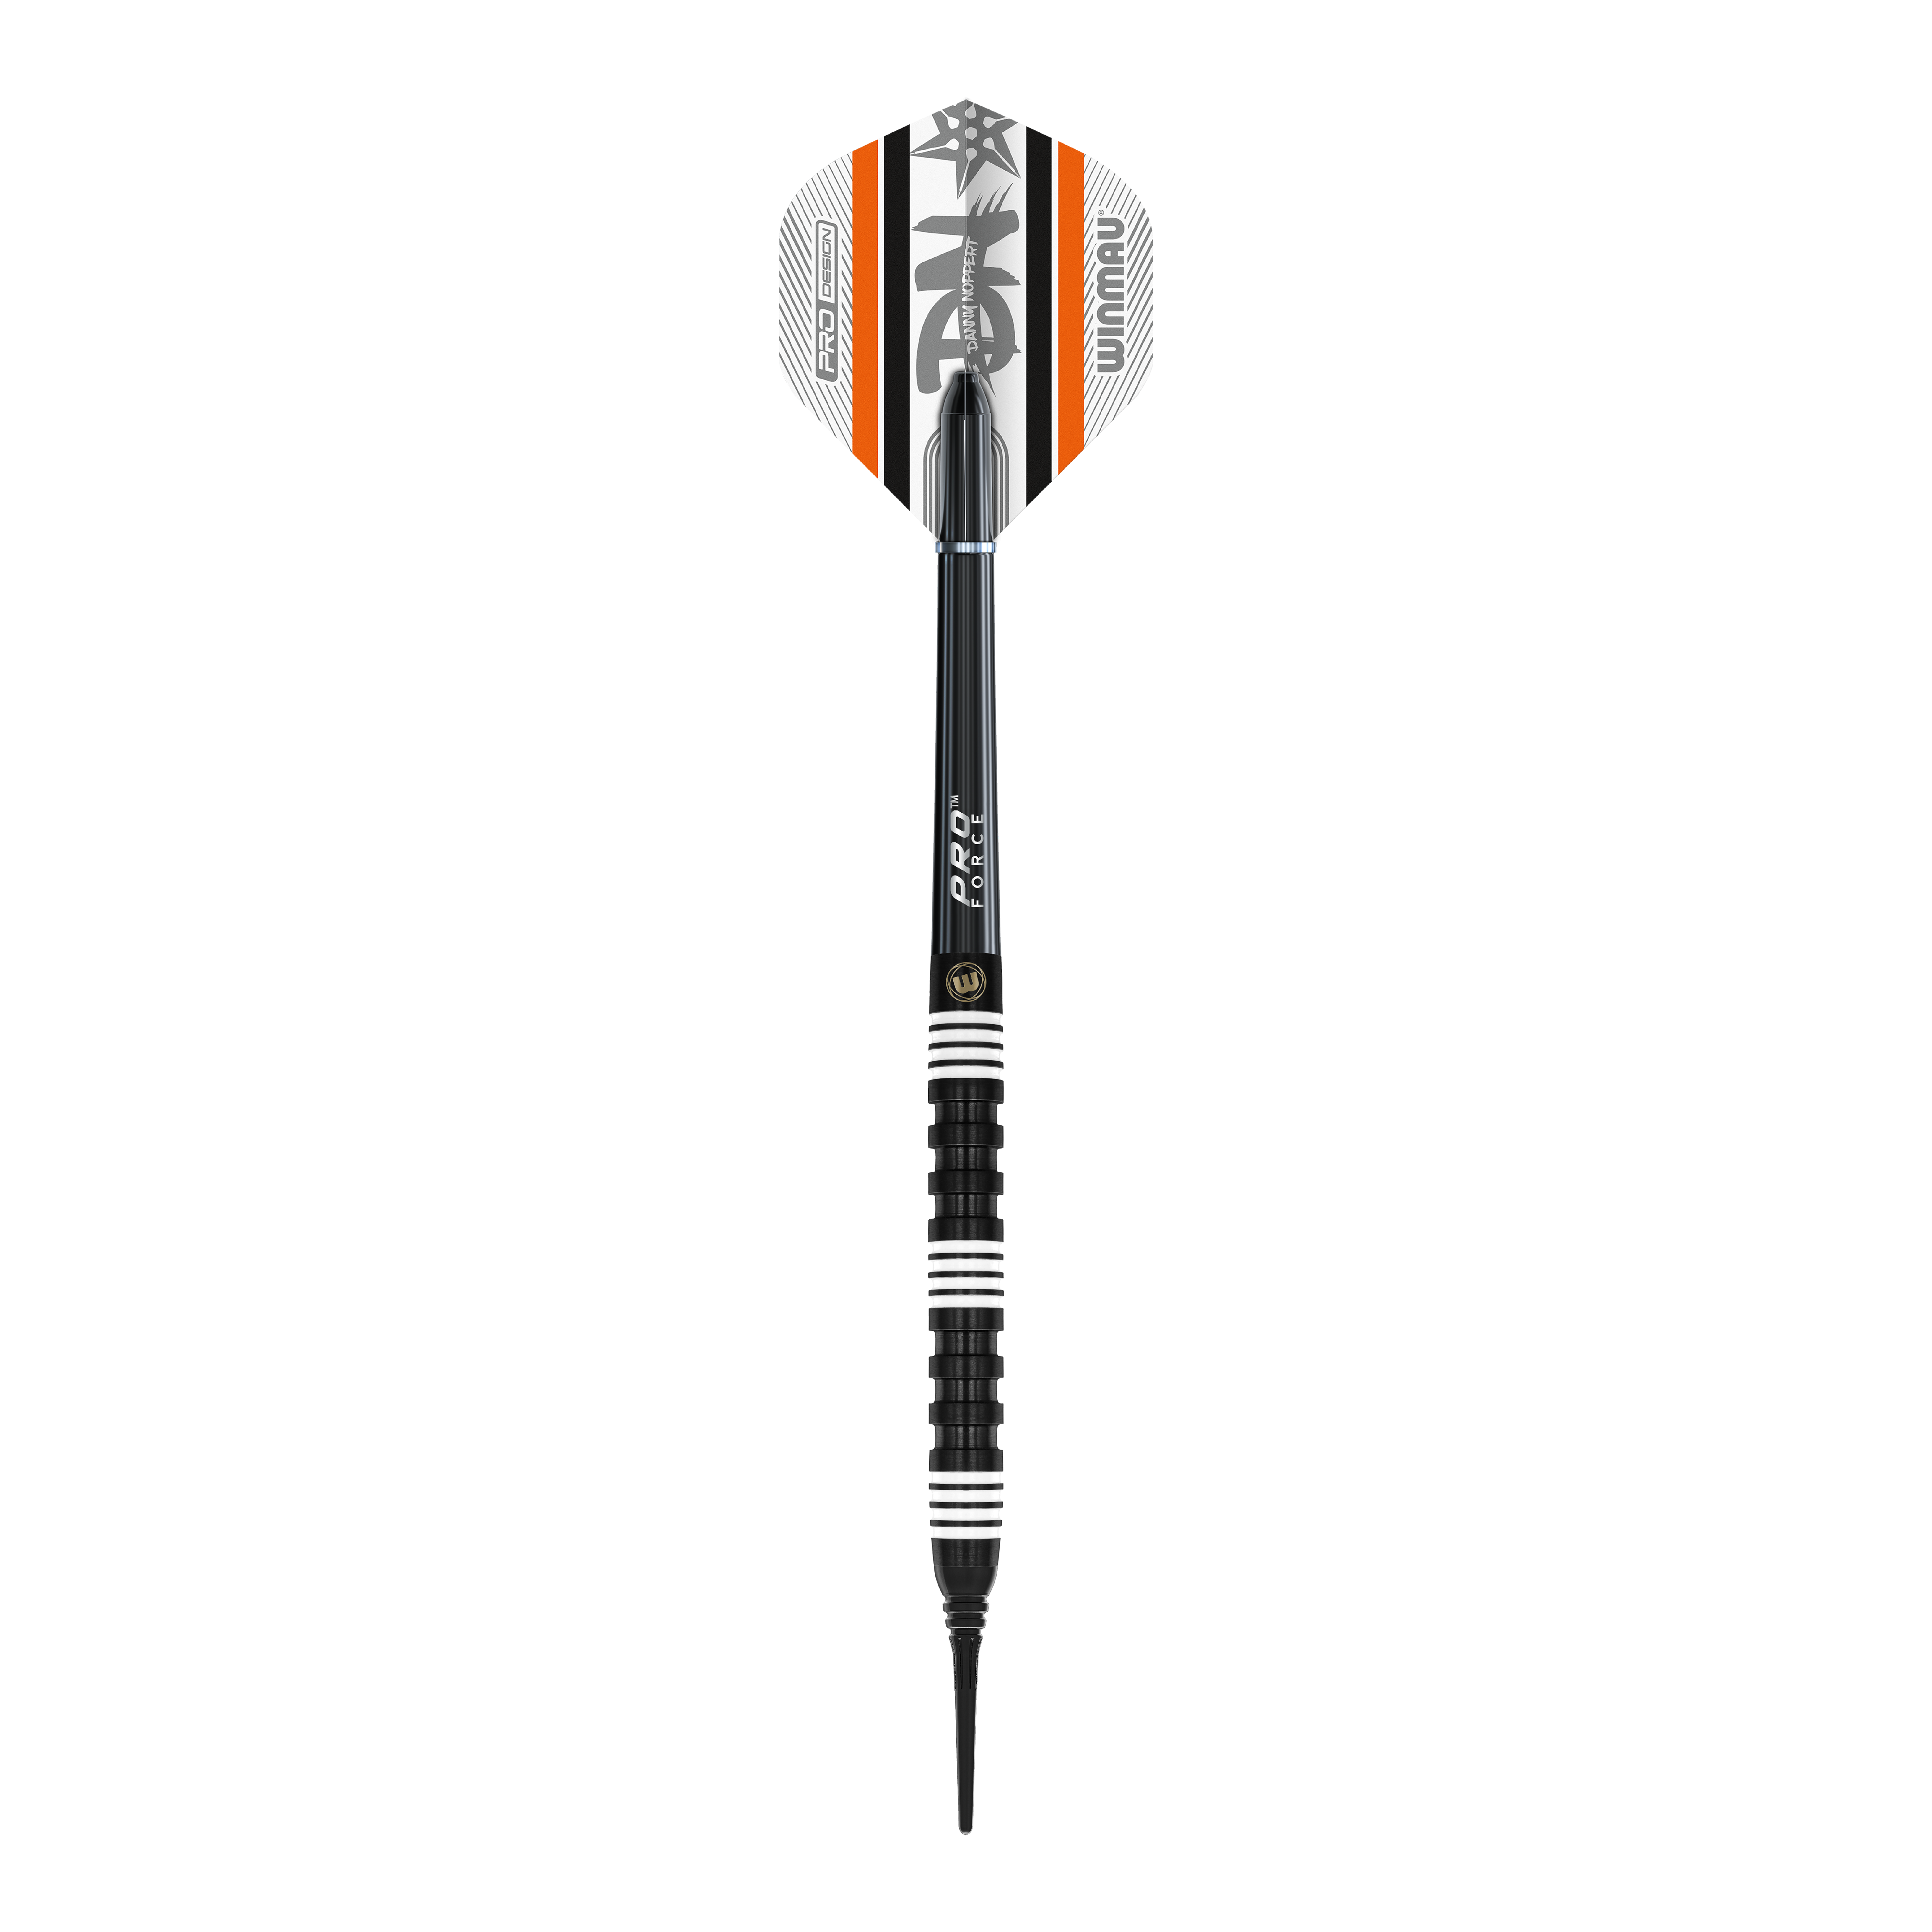 Winmau Danny Noppert 85 Pro-Series zachte darts - 20 g